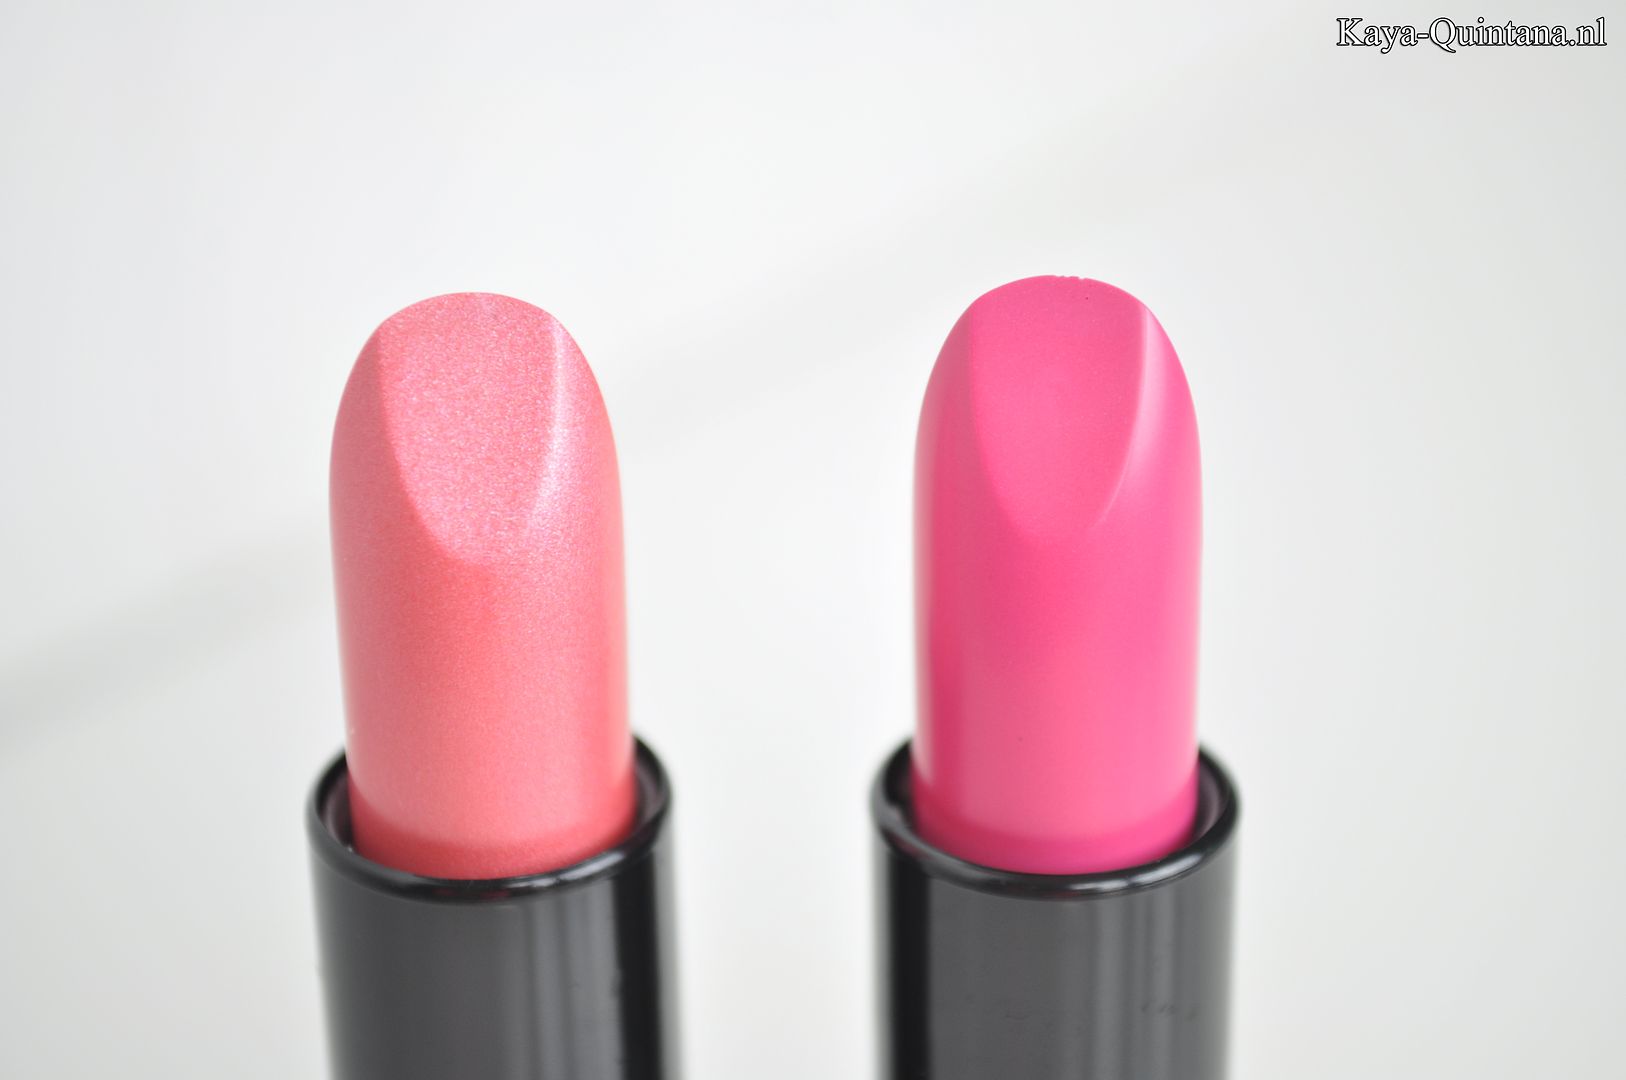 Bourjois rouge edition lipstick swatches Rose coquette en Rose studio